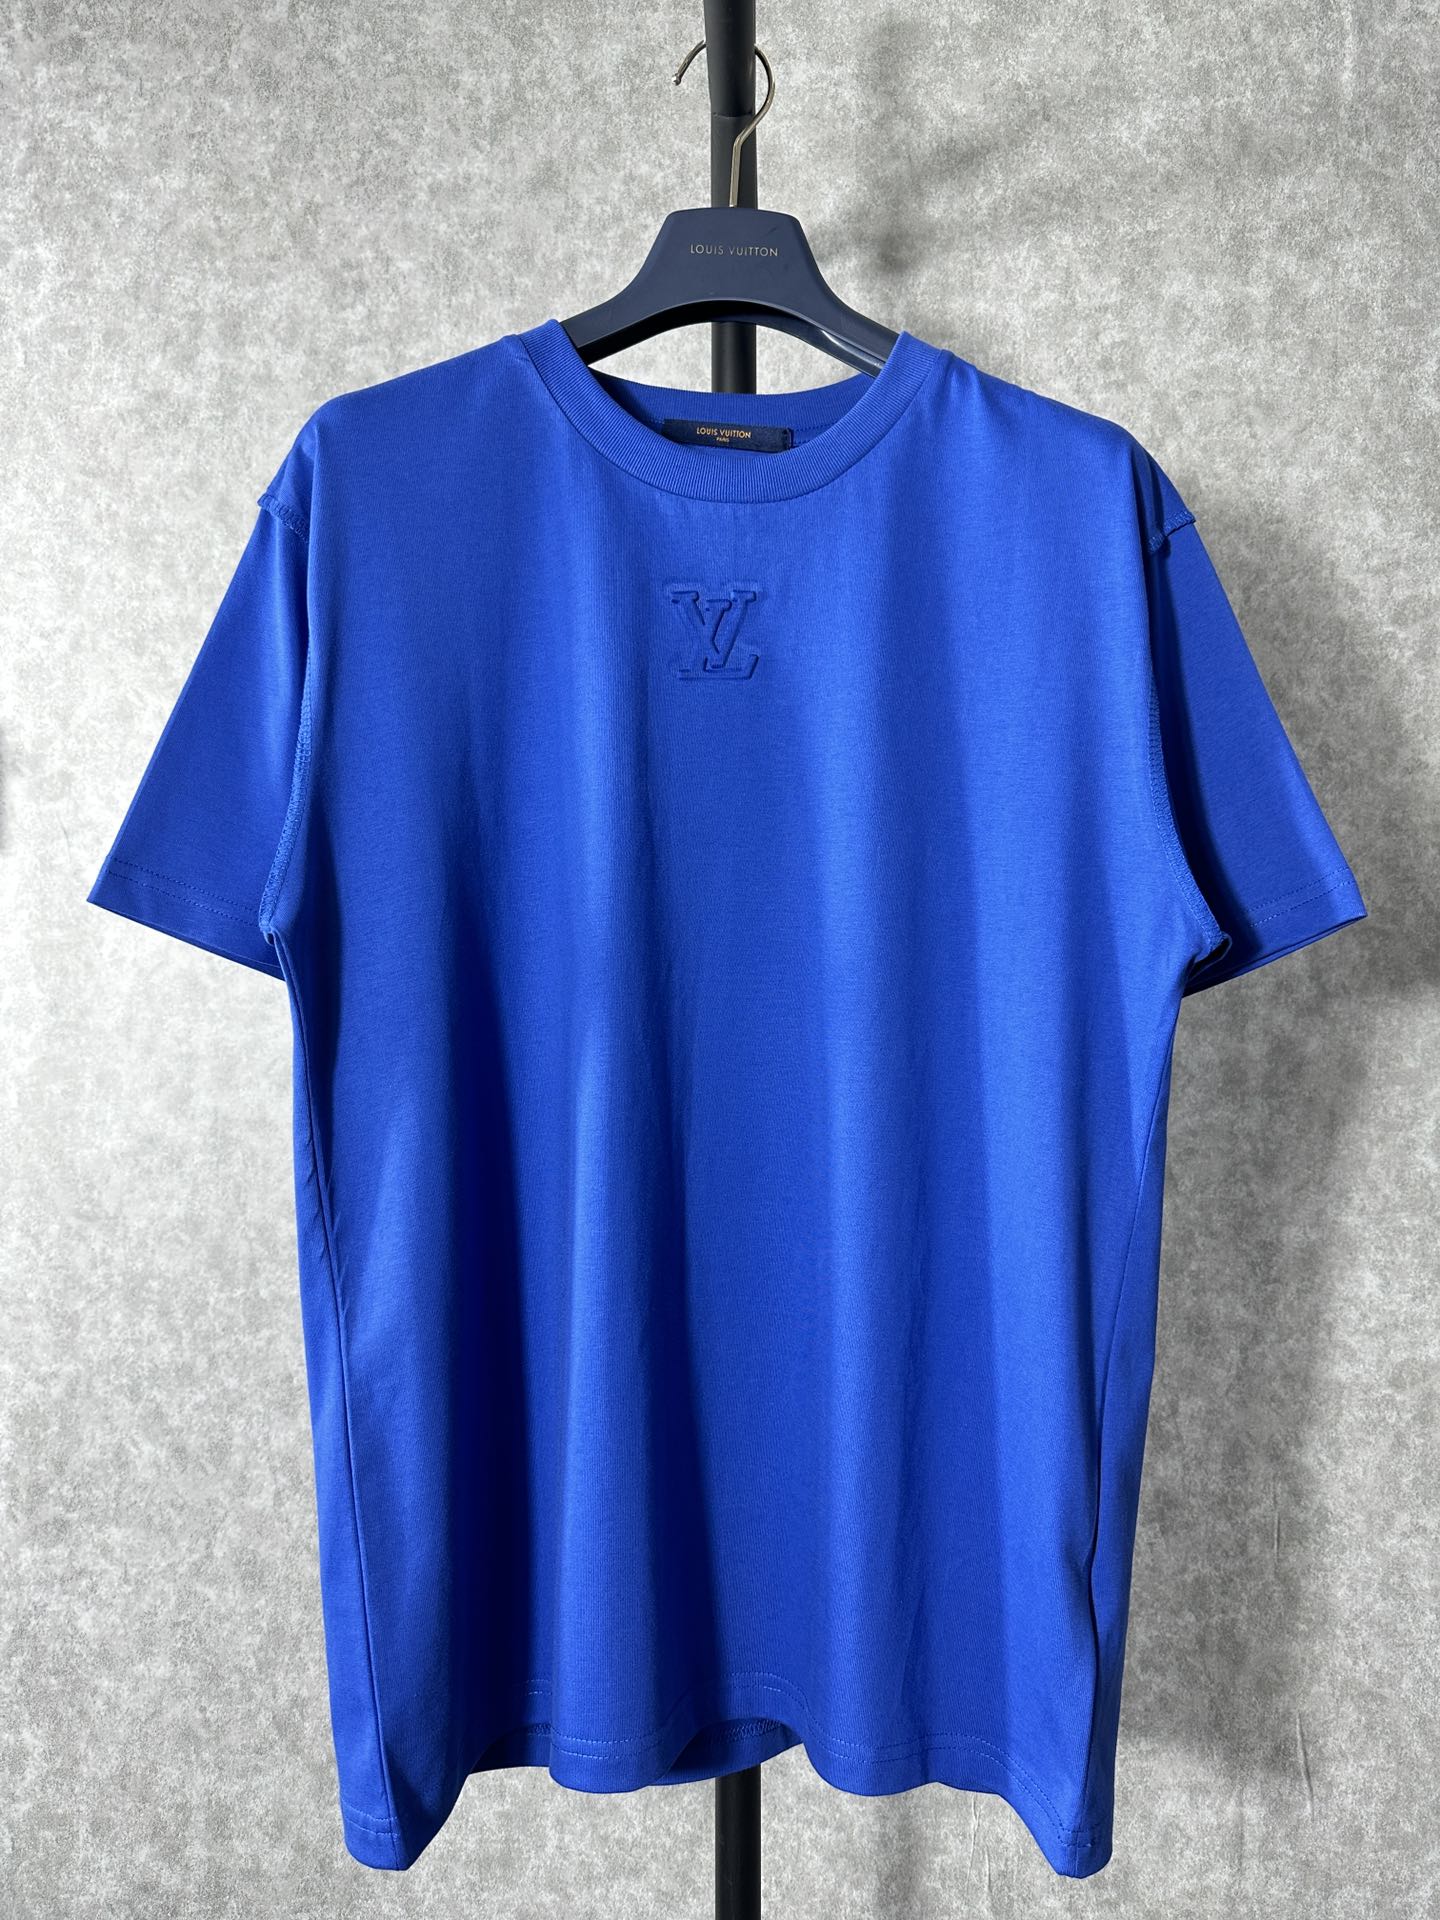 Louis Vuitton Clothing T-Shirt Blue Unisex Cotton Spring/Summer Collection Short Sleeve